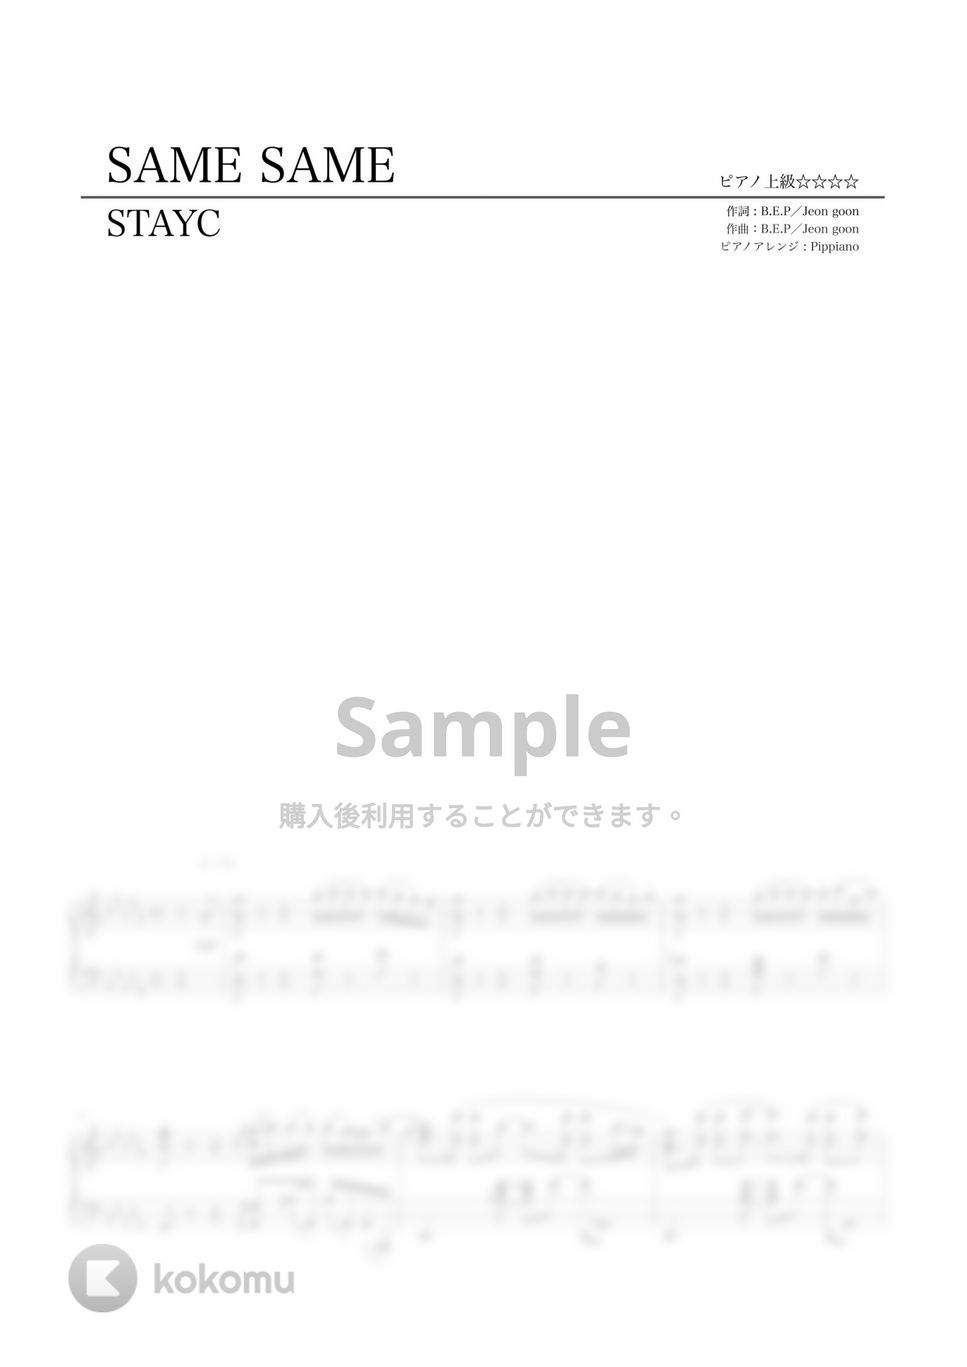 STAYC - SAME SAME by Pippiano